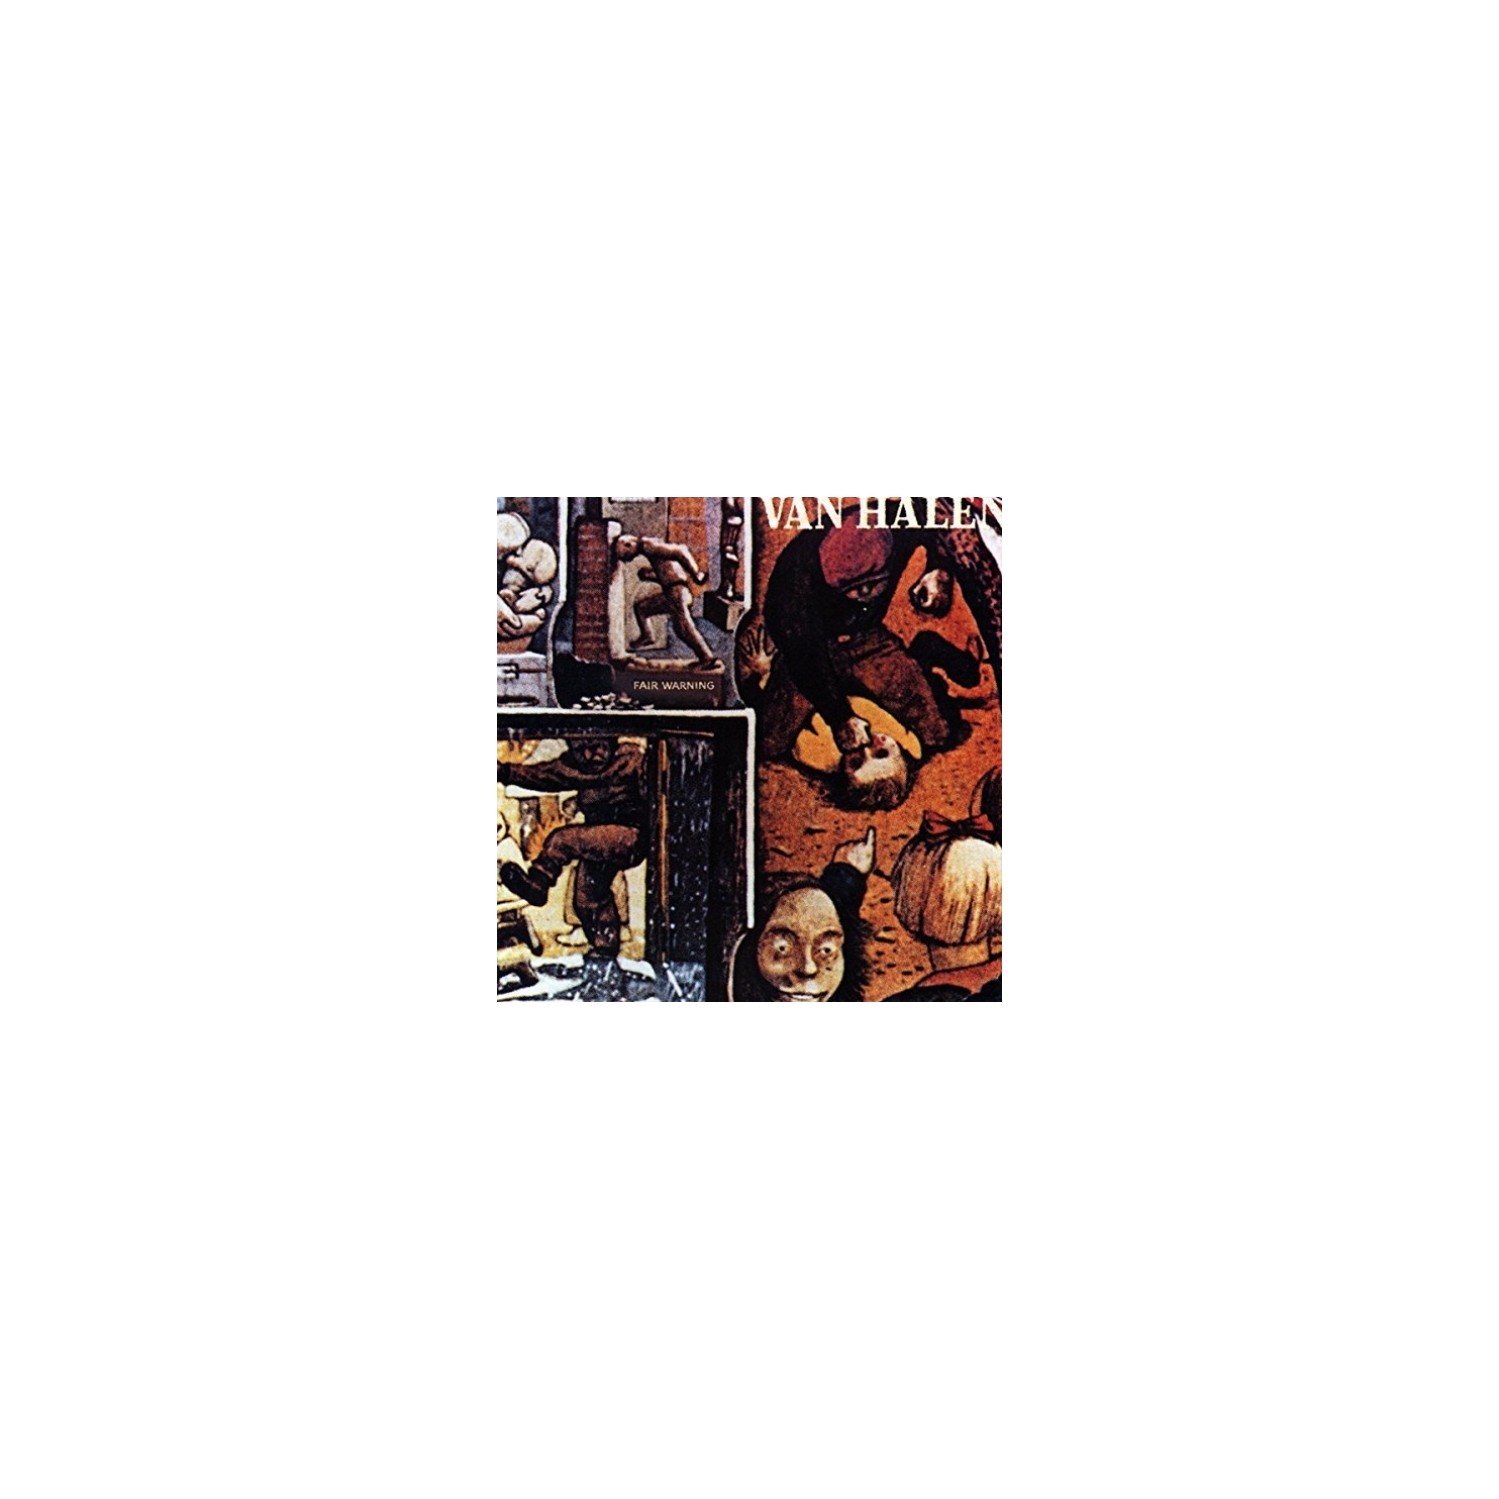 FAIR WARNING (REMASTERED) (LP) - VAN HALEN [LP]